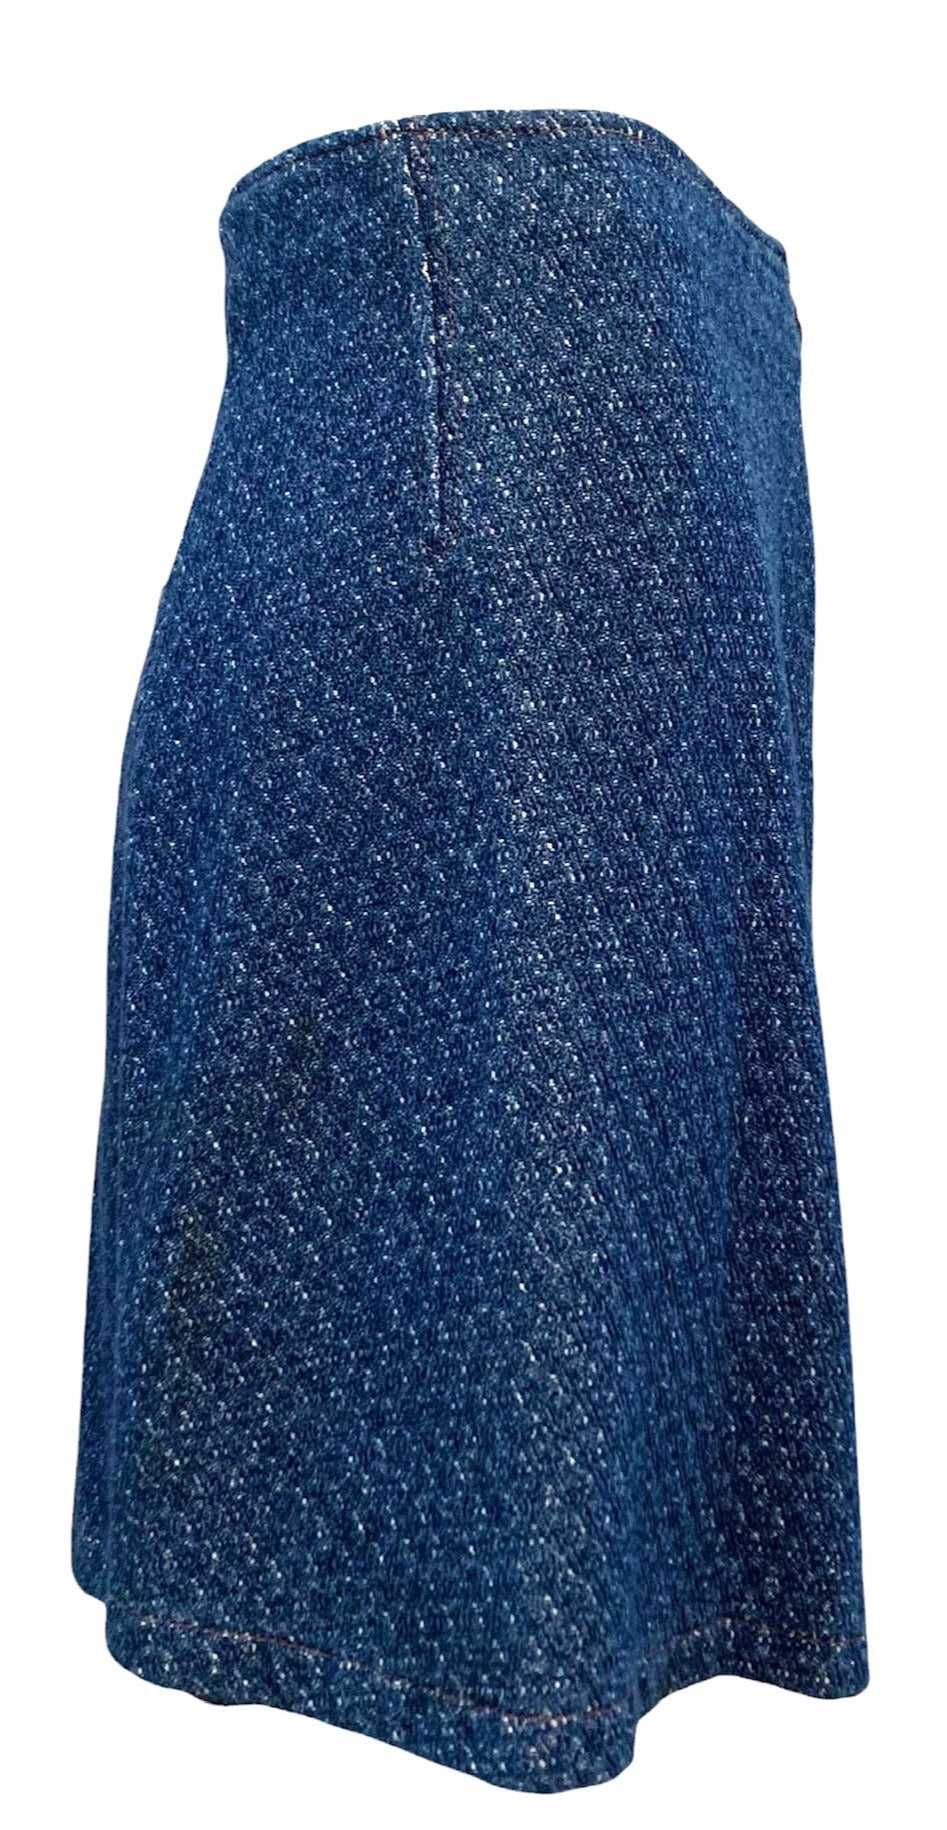  Christian Lacroix 90s Denim Look A-Line Mini Skirt SIDE 2 of 6